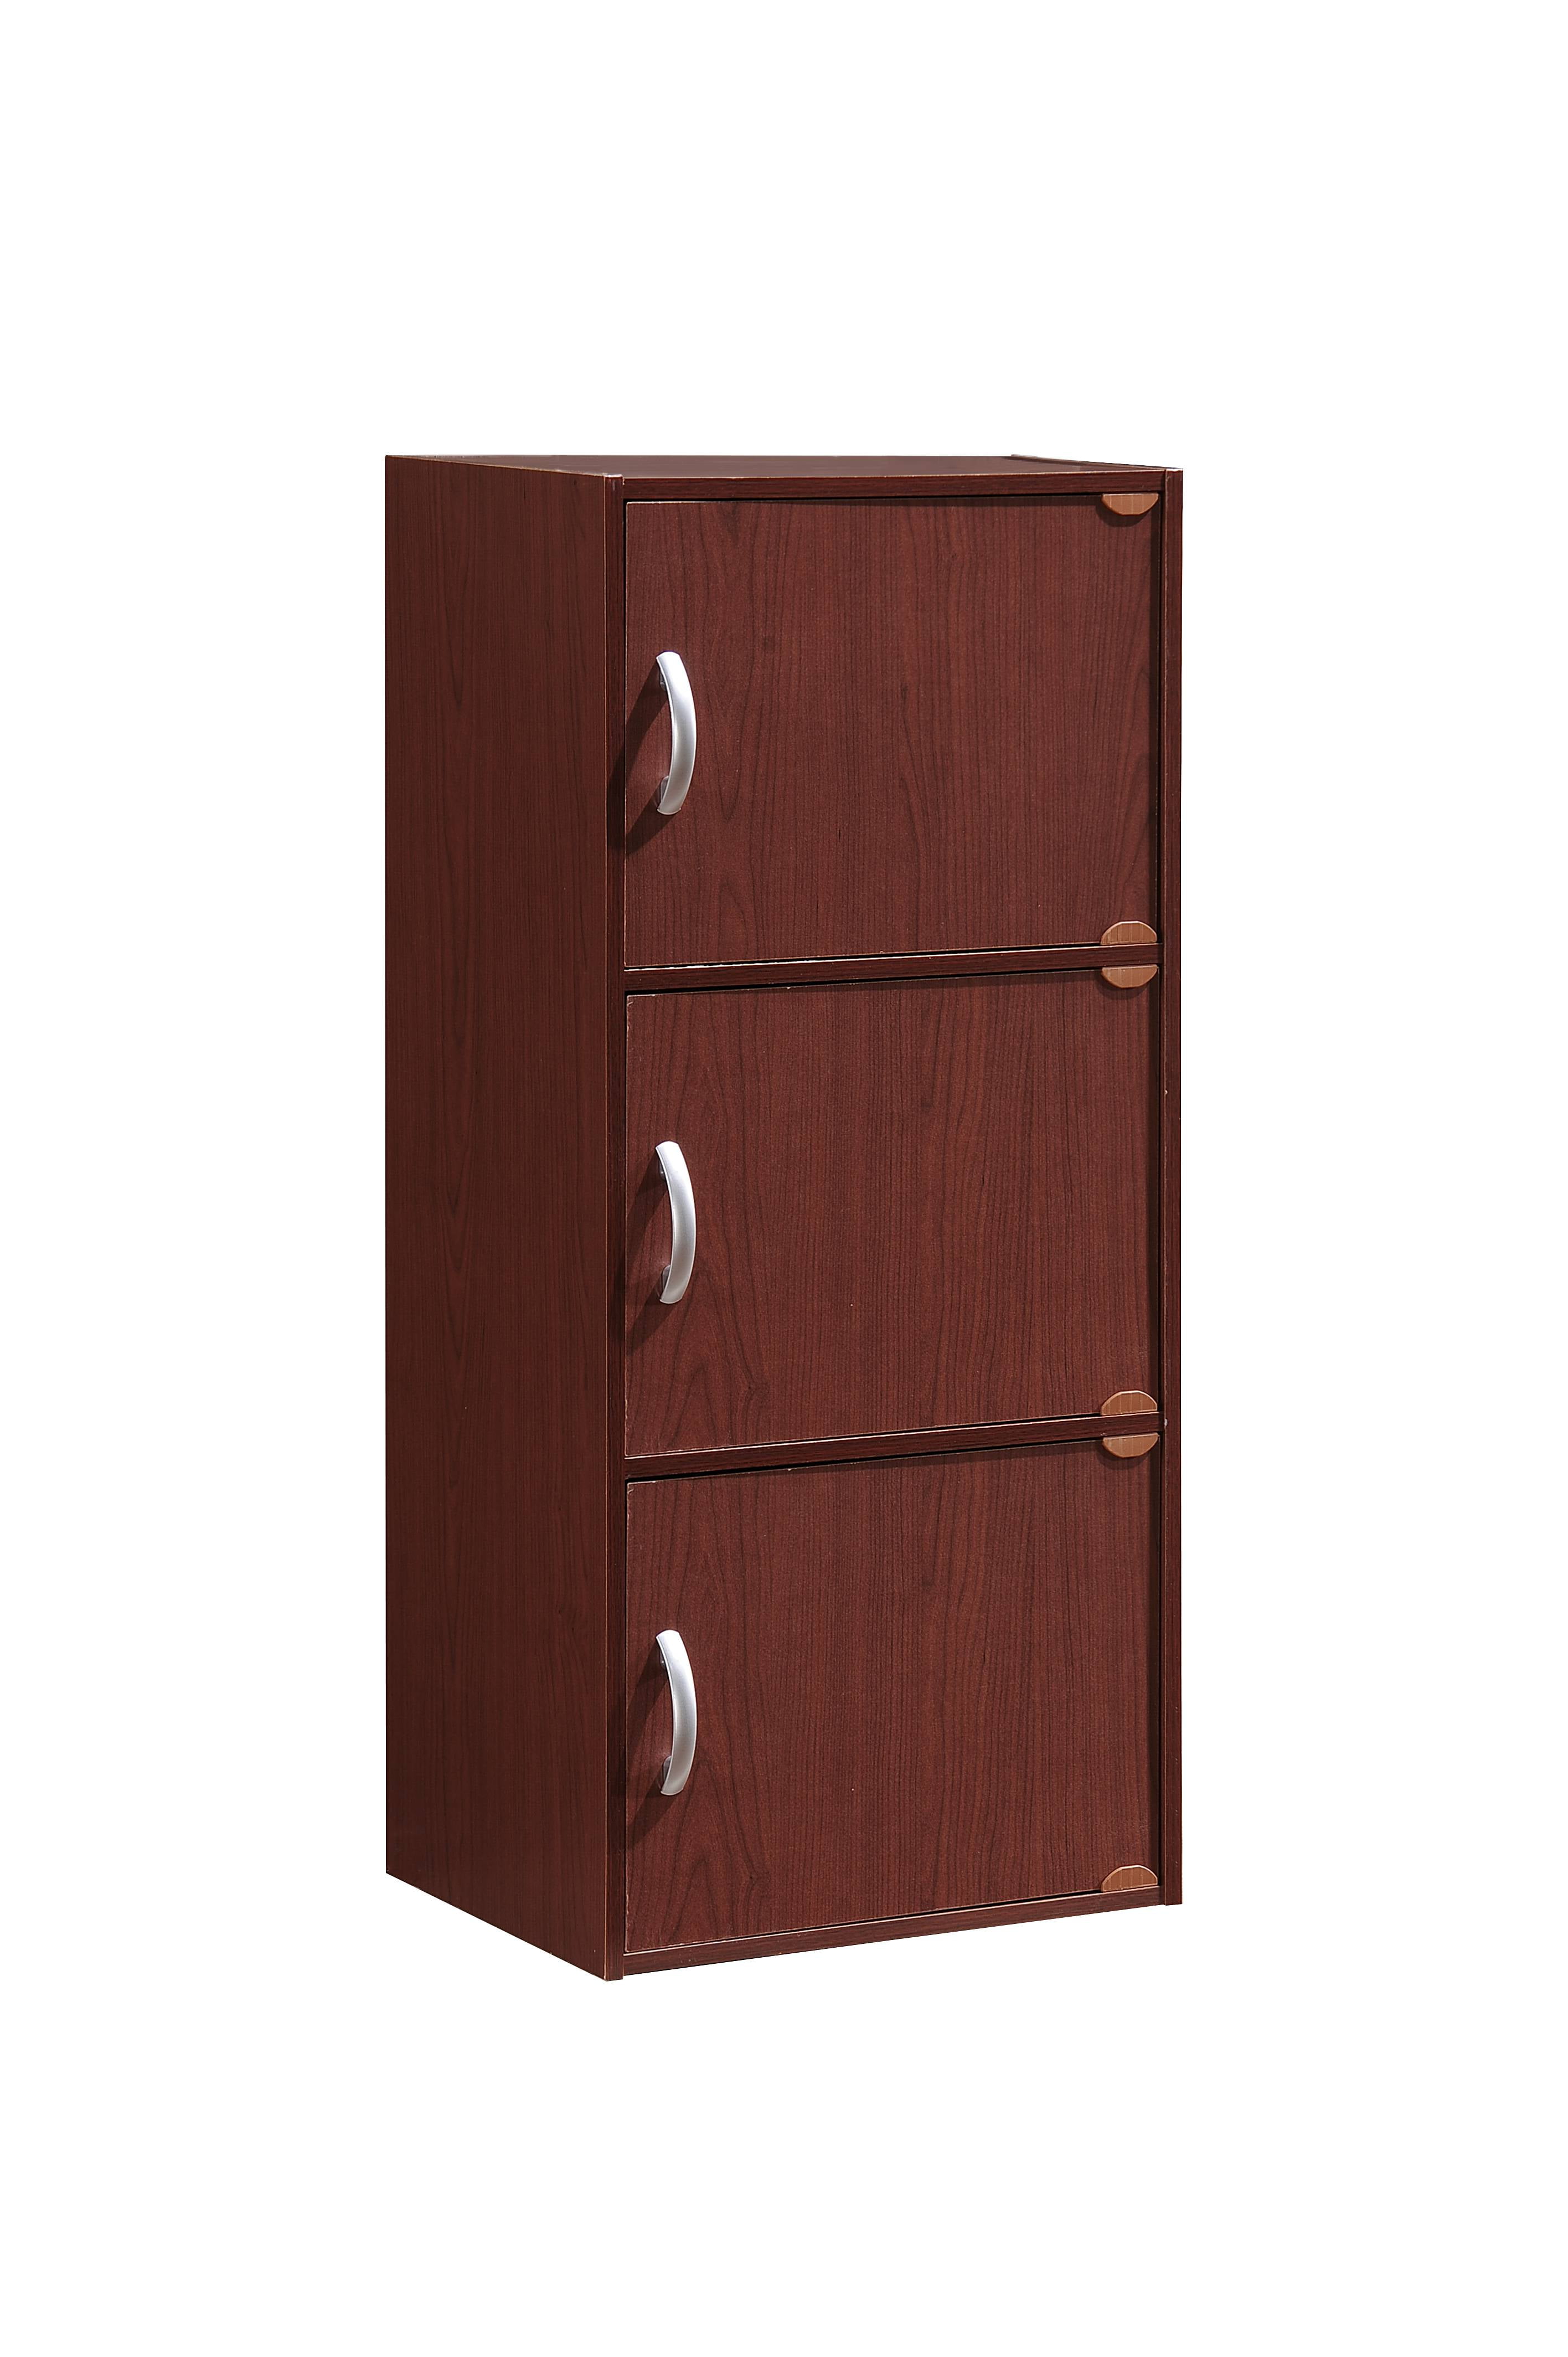 Multi-Purpose Cabinet 5 Shelf Door Storage Home Office Versatile Wood Organizer 